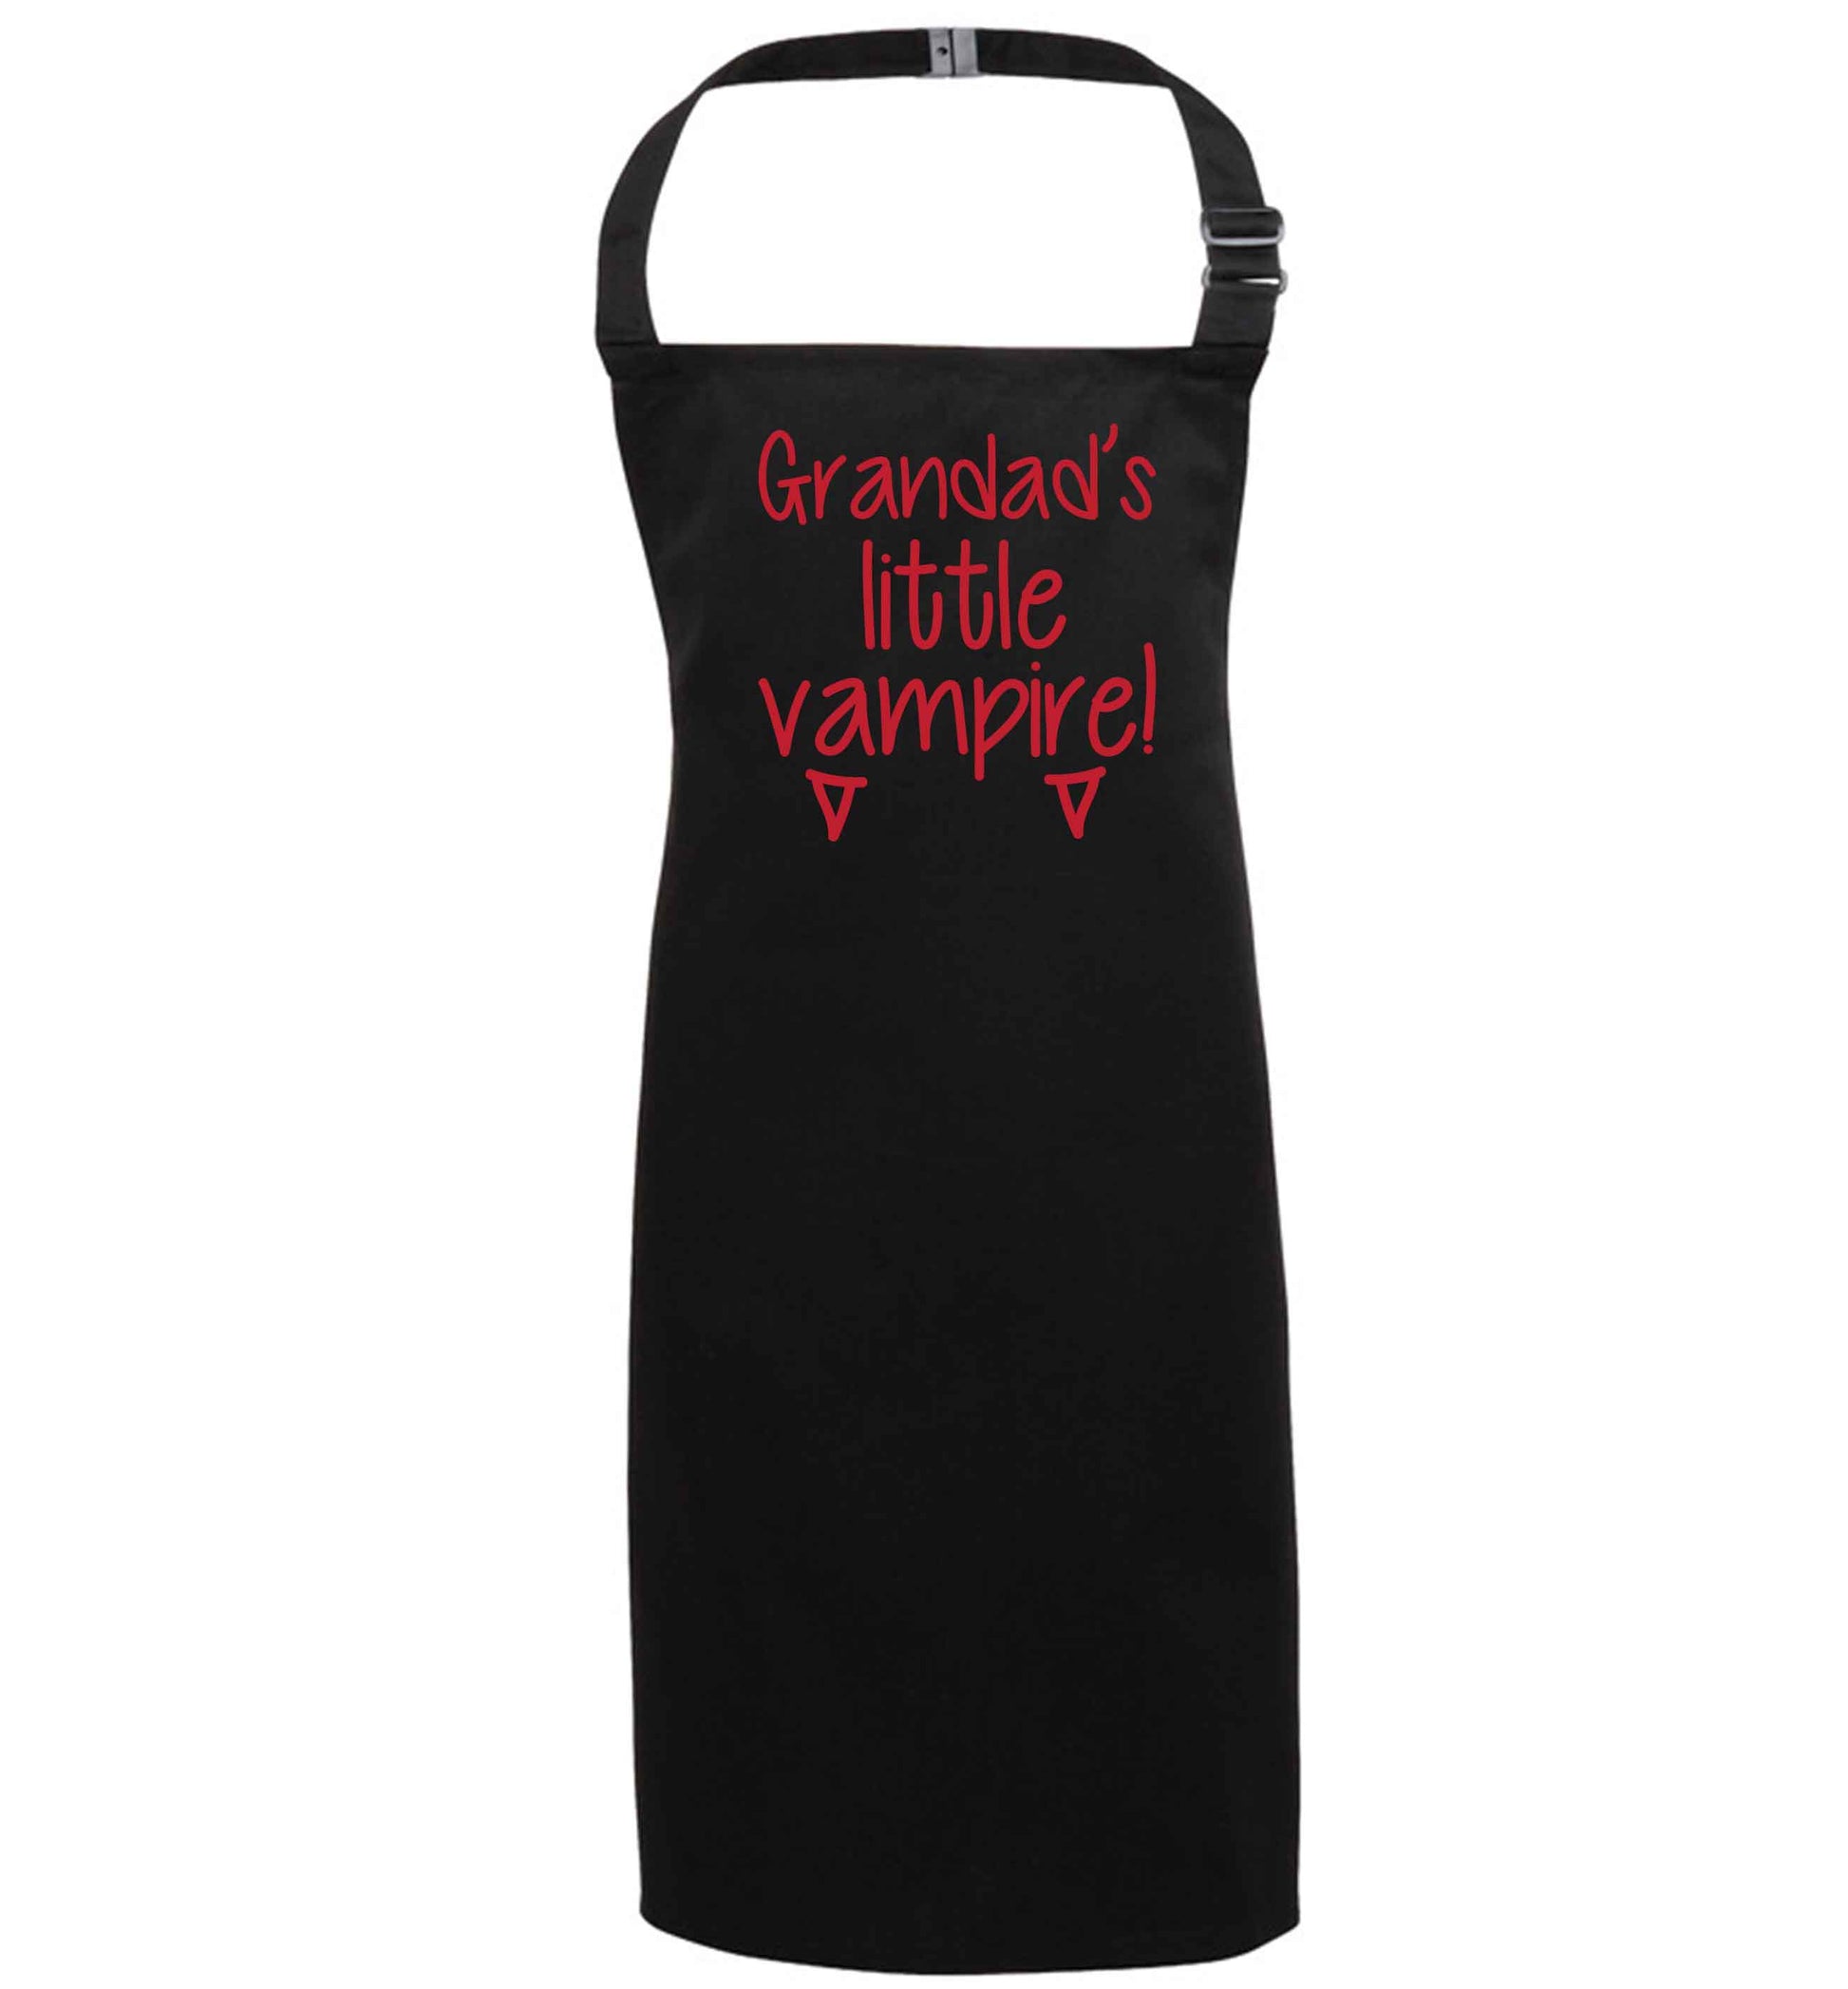 Grandad's little vampire black apron 7-10 years